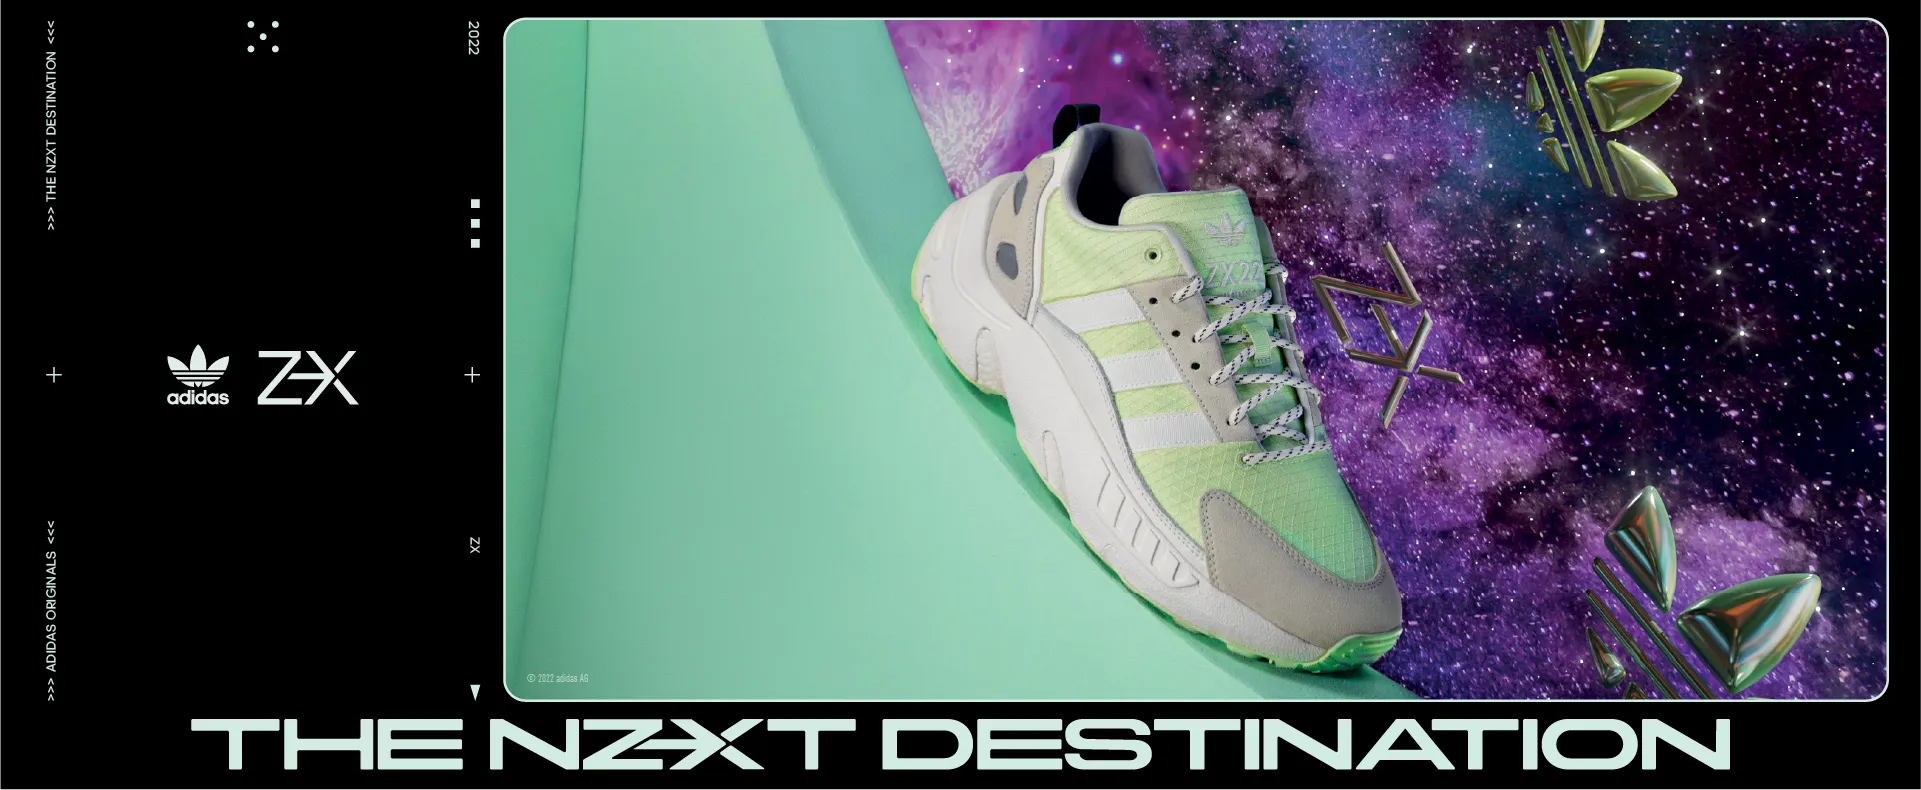 Adidas ZX Boost